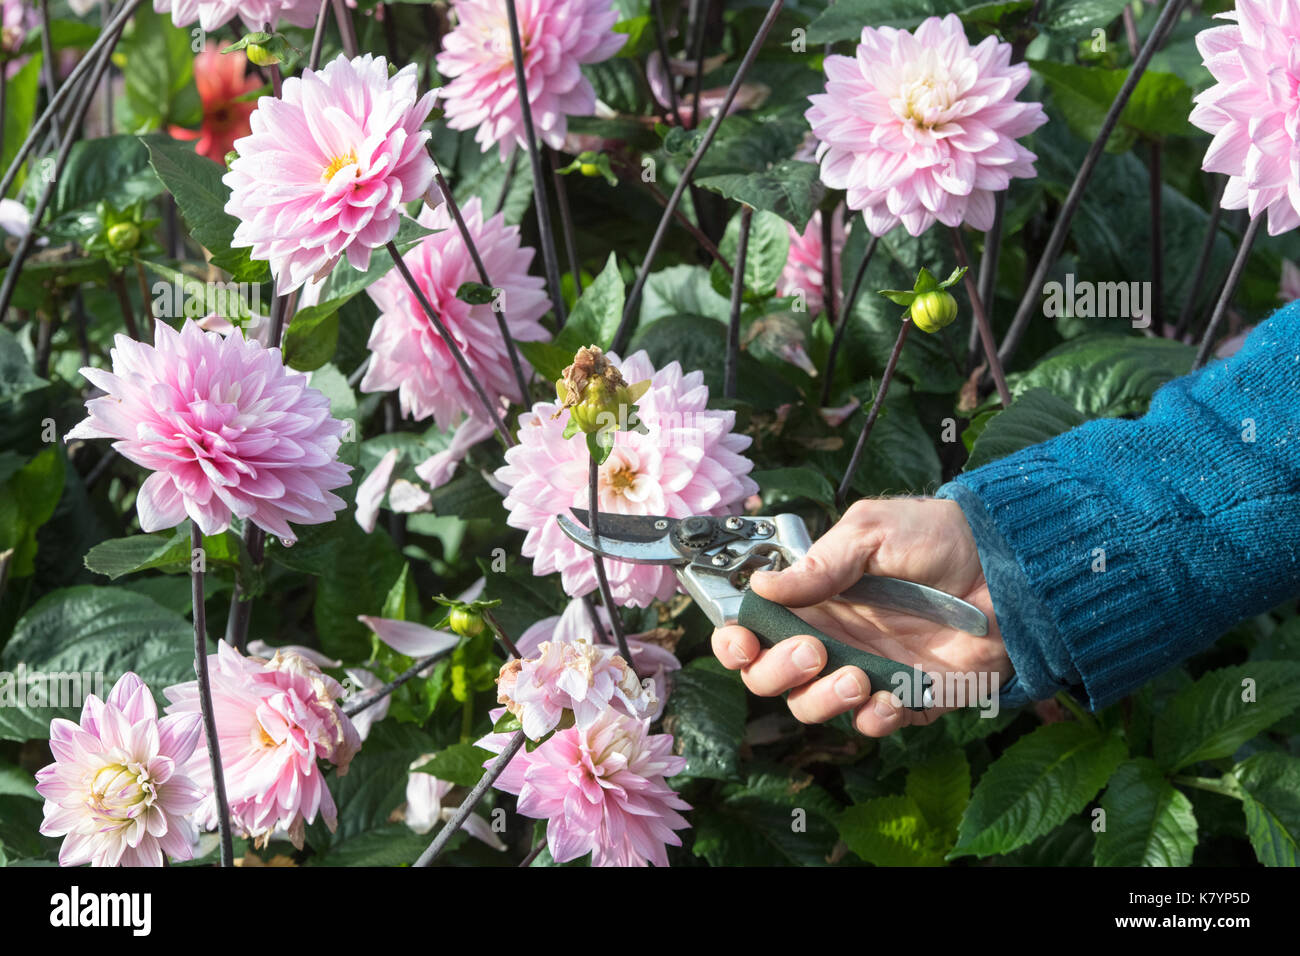 Gardener deadheading Dahlia flowers with secateurs in an english garden. UK Stock Photo